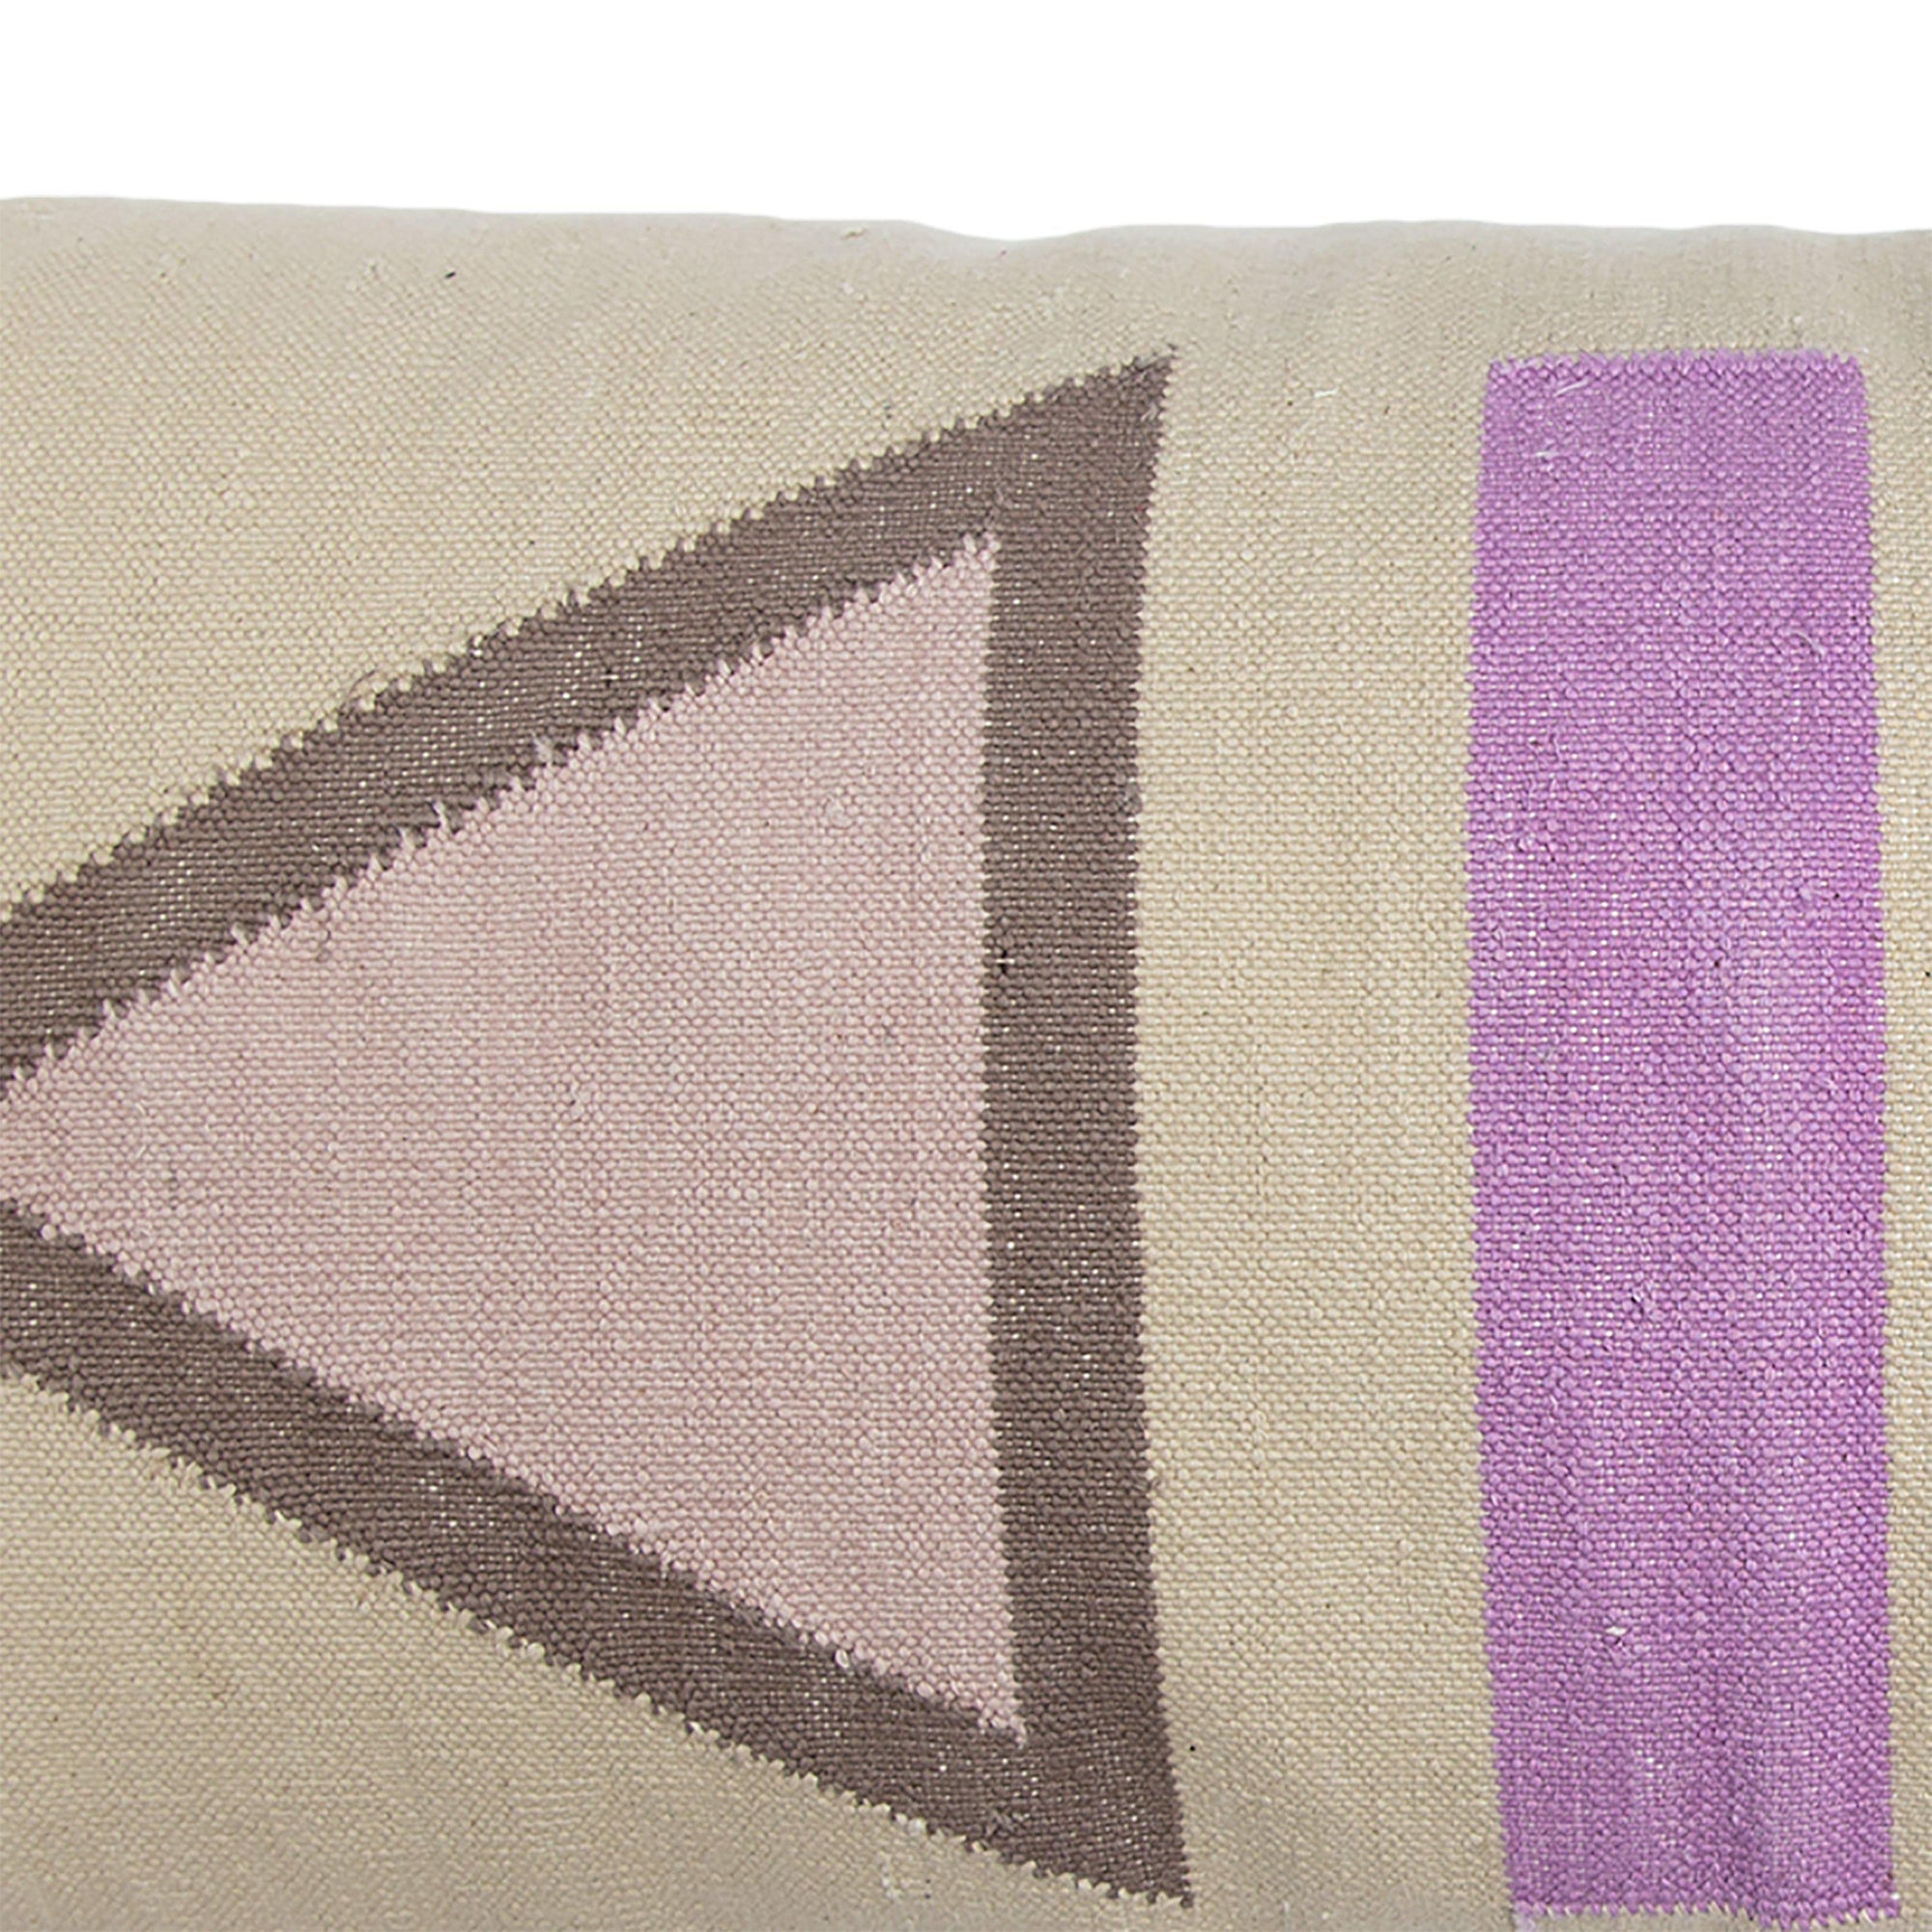 Rugs by Roo | Leah Singh Dana Xl Lumbar Pillow - Pastel-H18DAN02